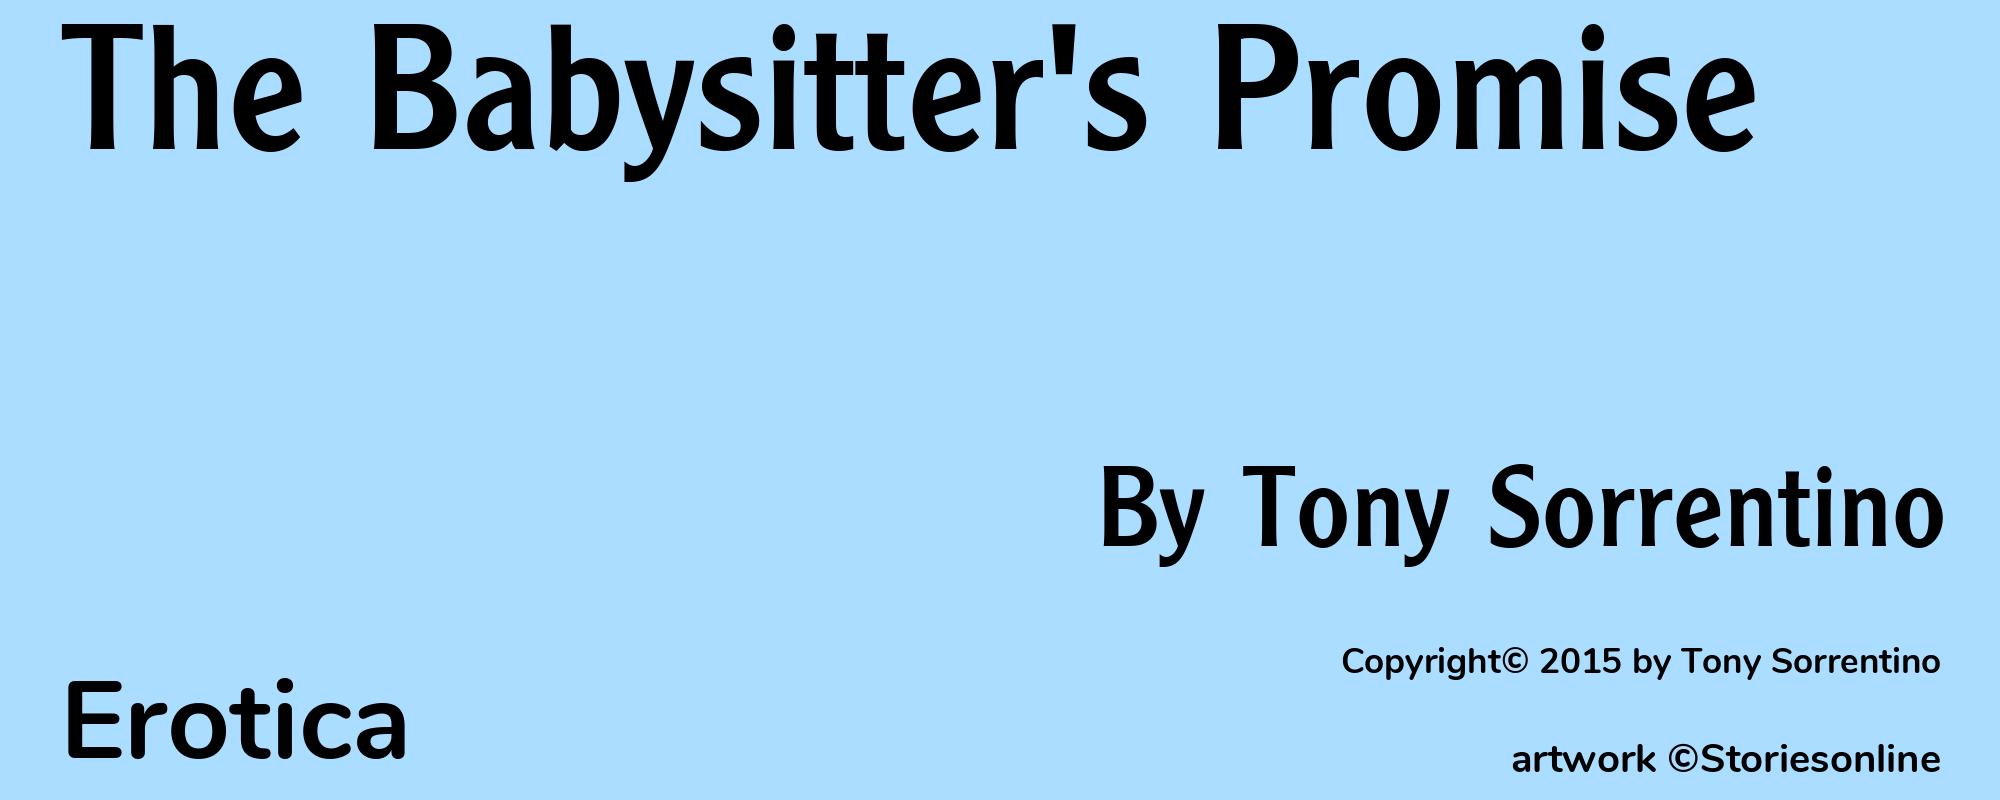 The Babysitter's Promise - Cover